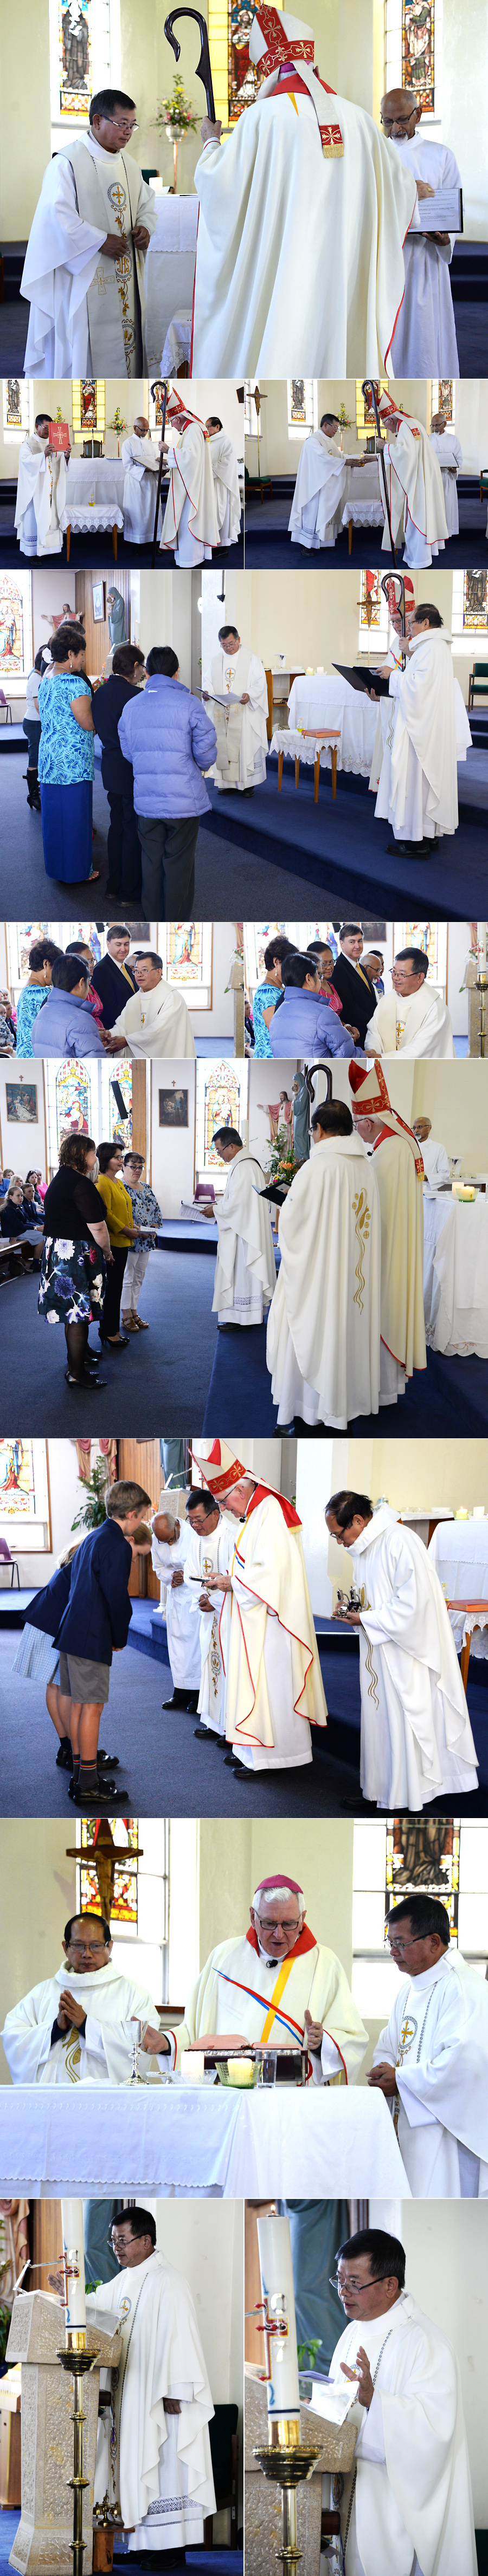 Inauguration of Father John Ho as PP of SJTE Parish